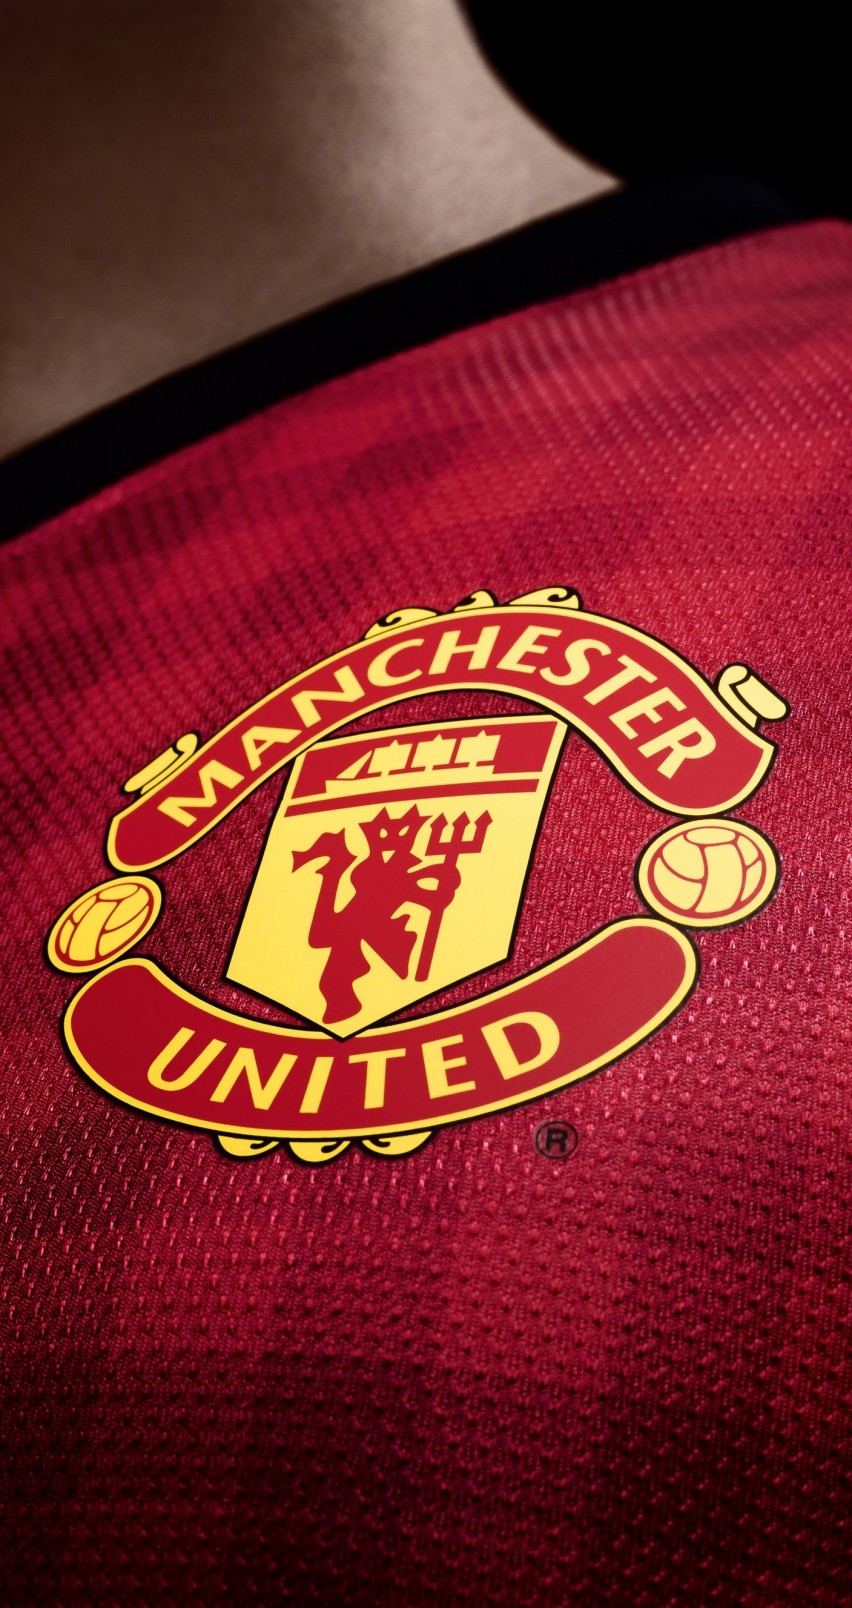 Manchester United Logo Shirt Wallpaper for Apple iPhone 6 / 6s